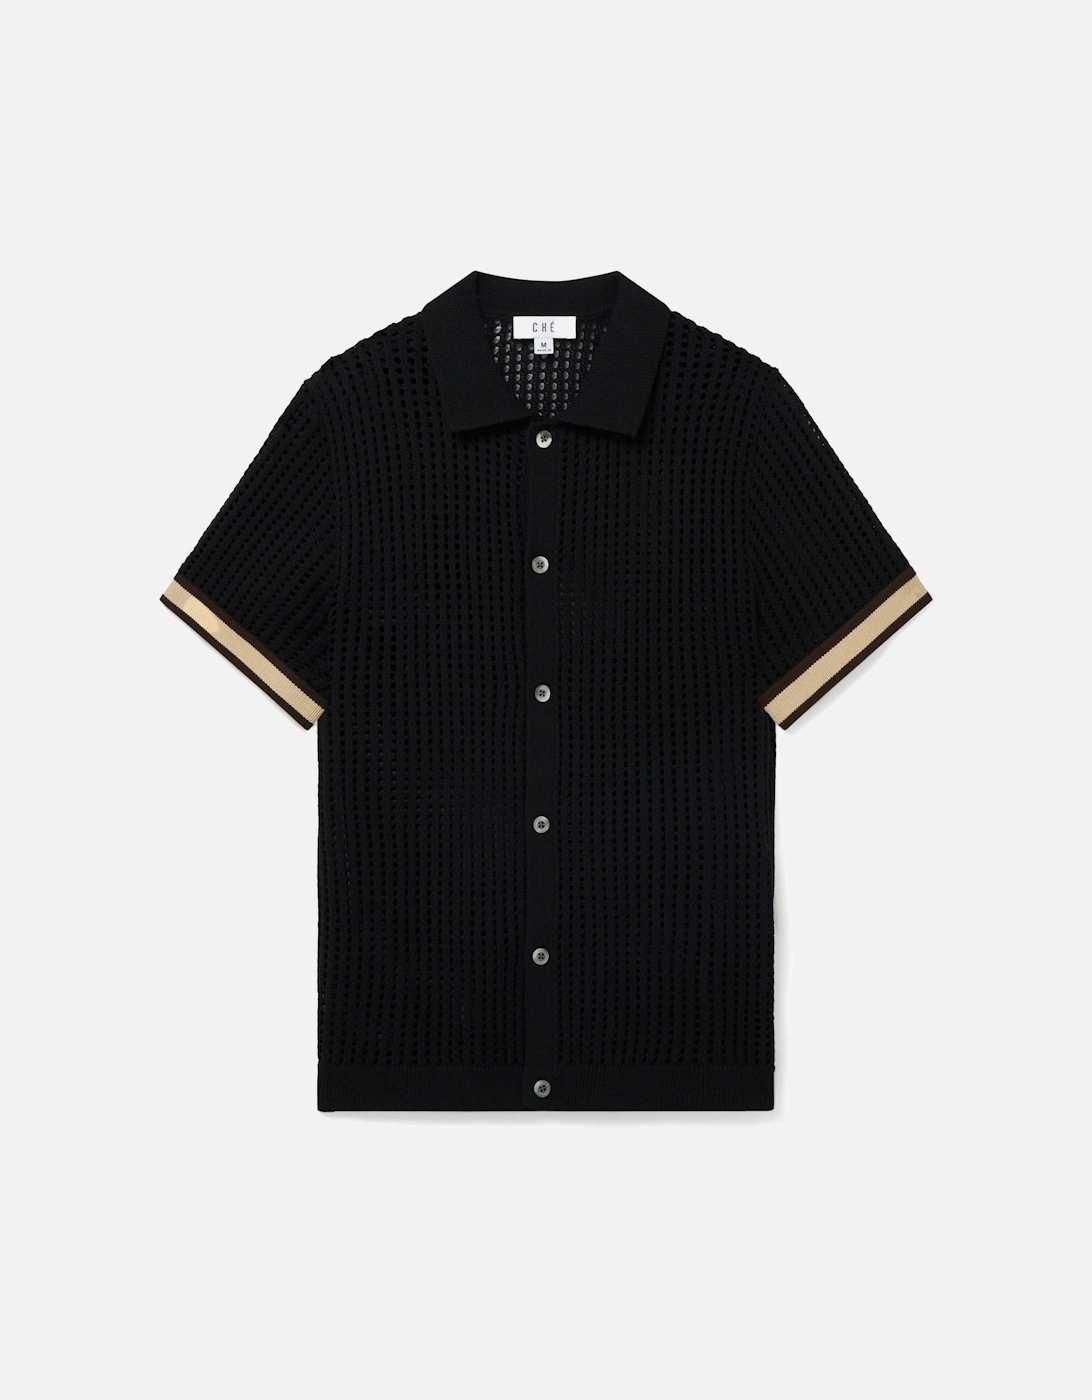 Elias Crochet Knitted Black Shirt